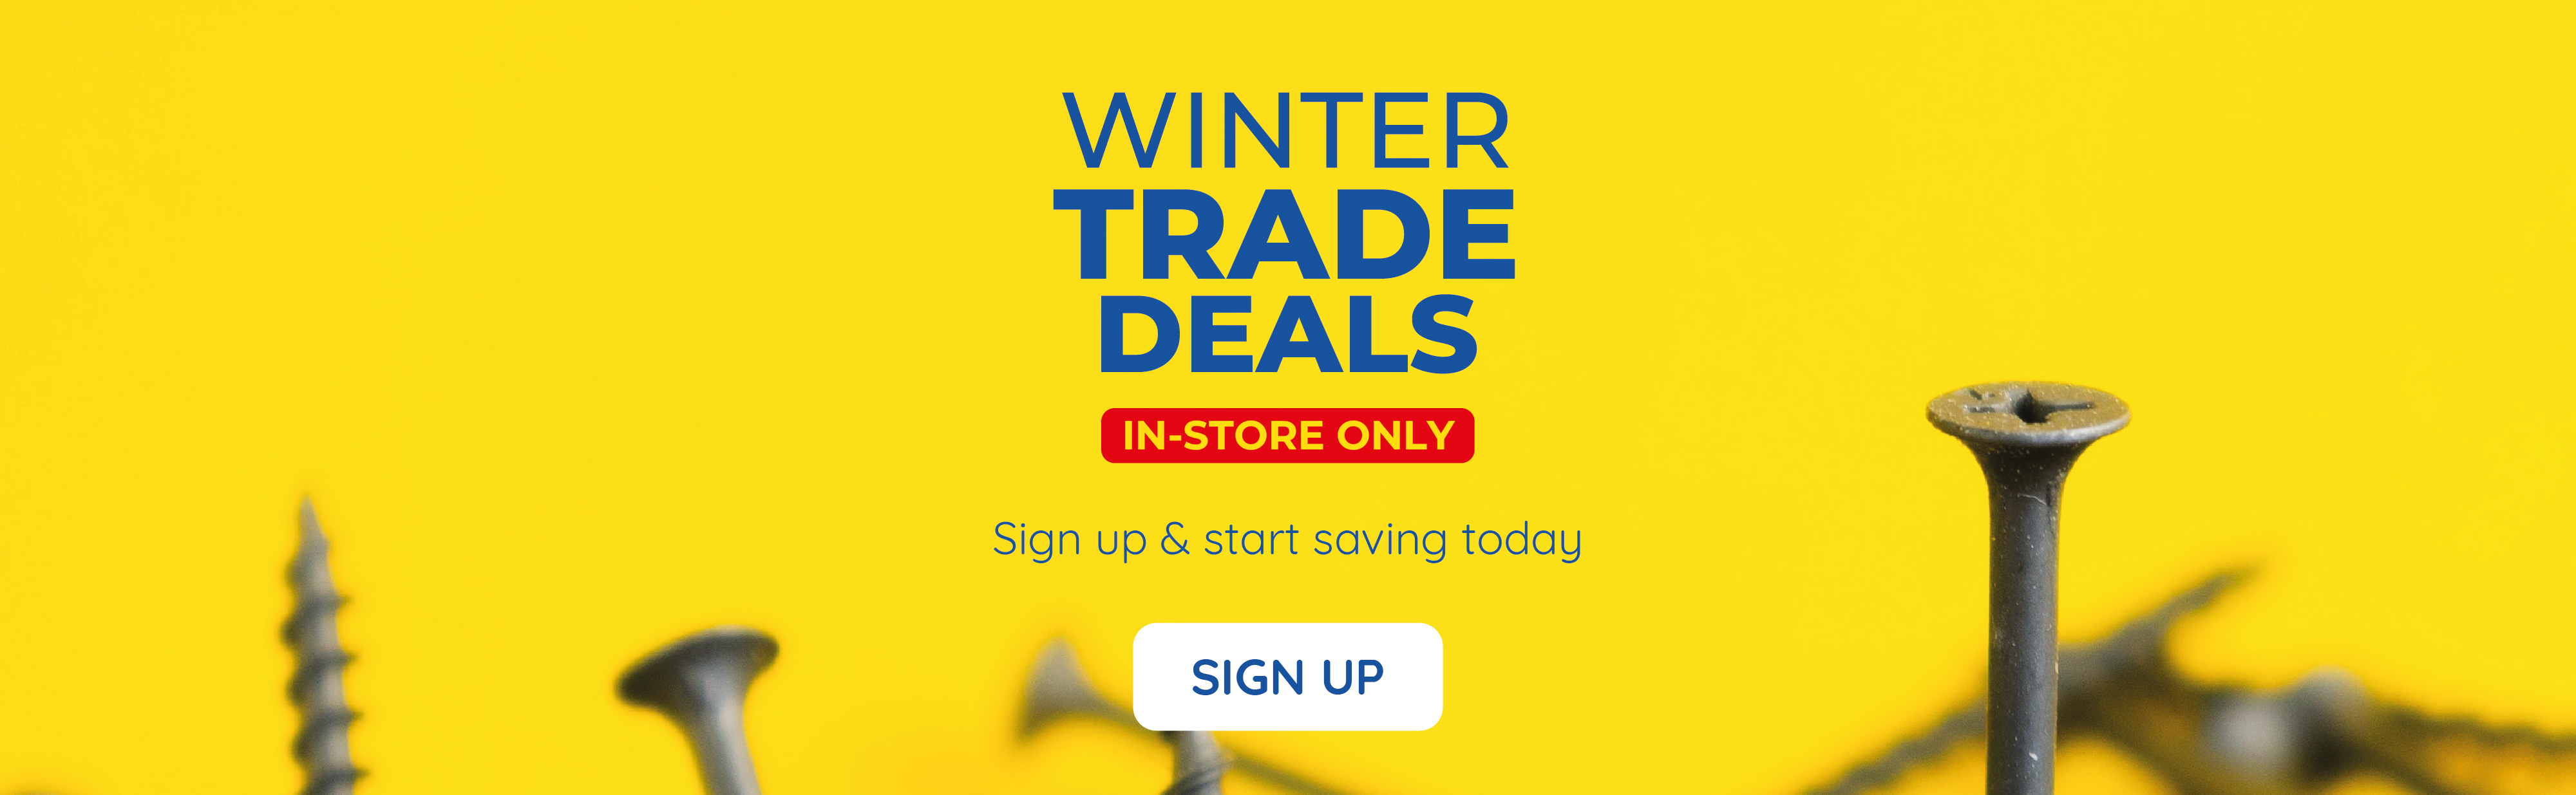 Winter Trade Deals